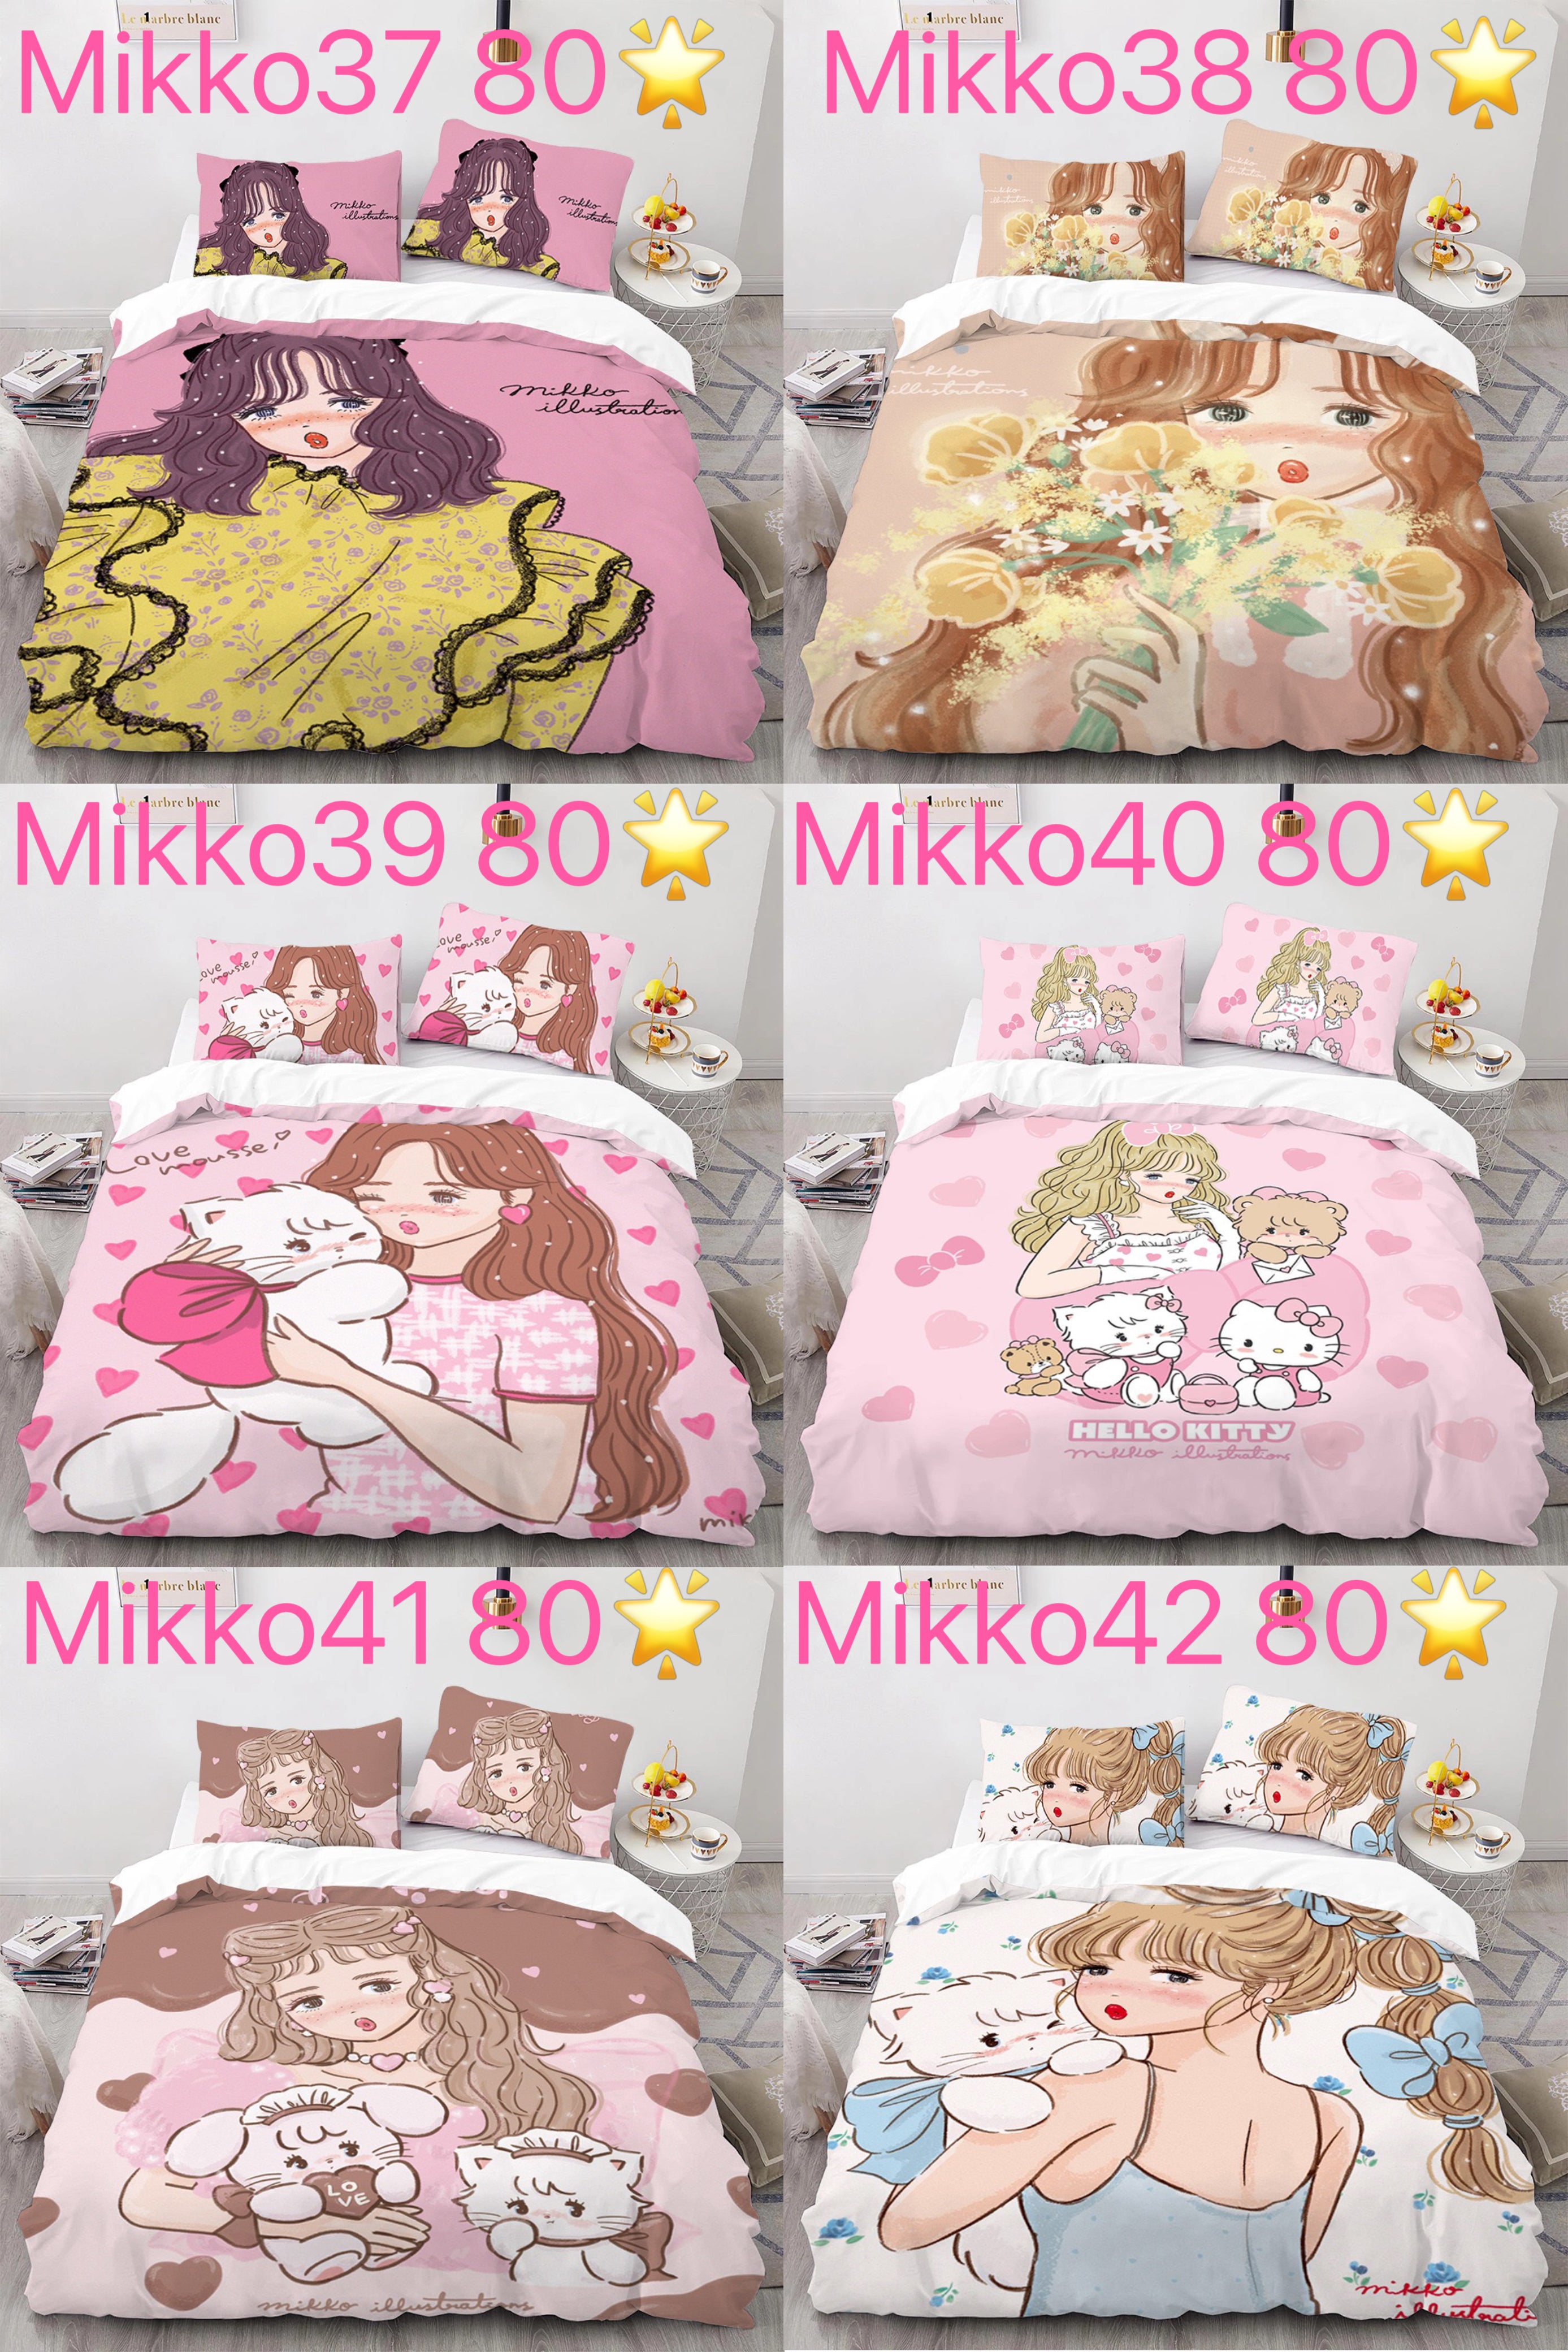 【Jessica only】Bed set, MIKKO, GUDETAMA